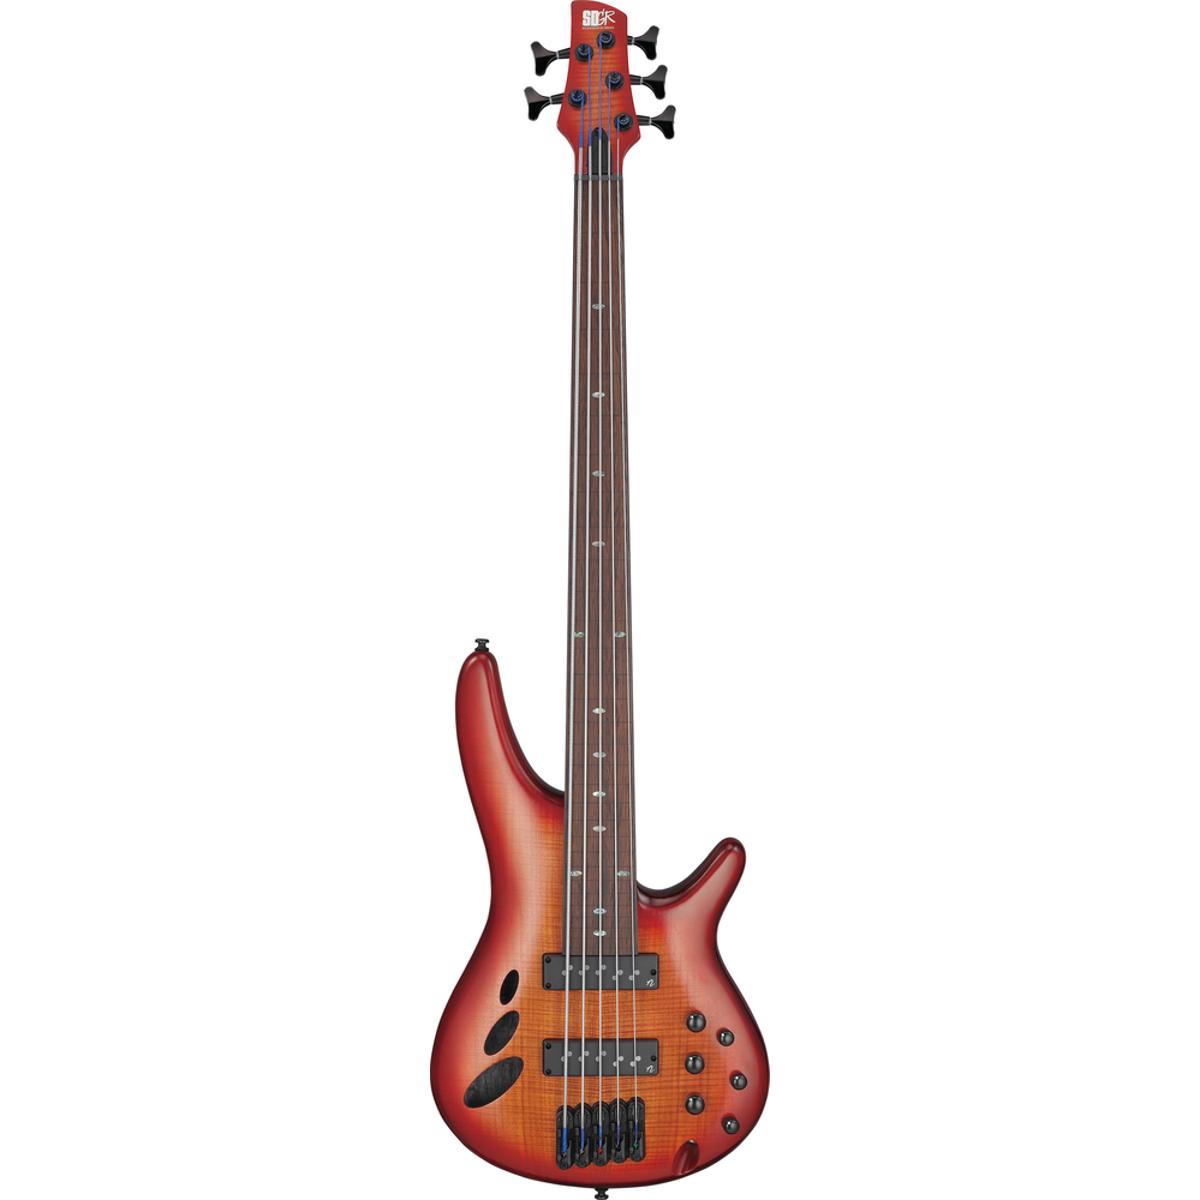 Ibanez SRD905FBTL Bass Guitar 5-String Brown Topaz Burst Low Gloss